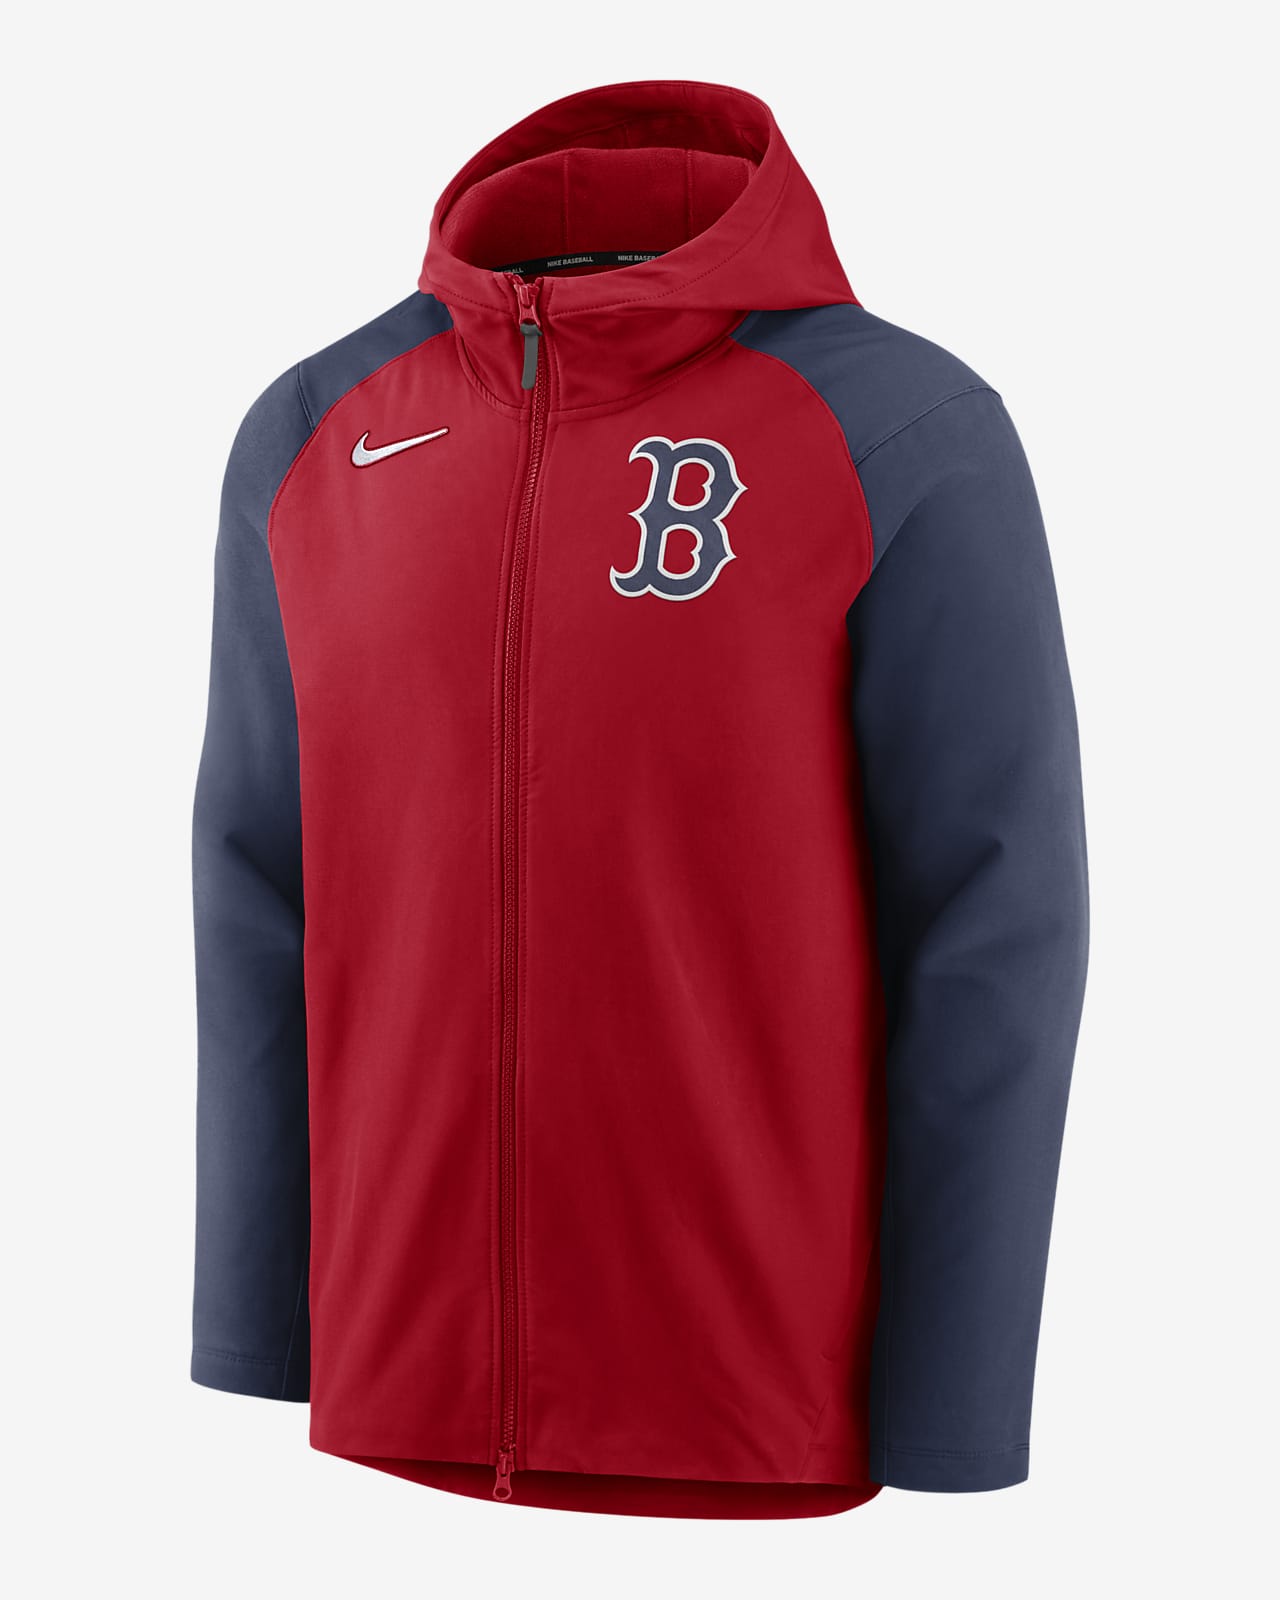 Nike Therma Player (MLB Boston Red Sox) Men's Full-Zip Jacket